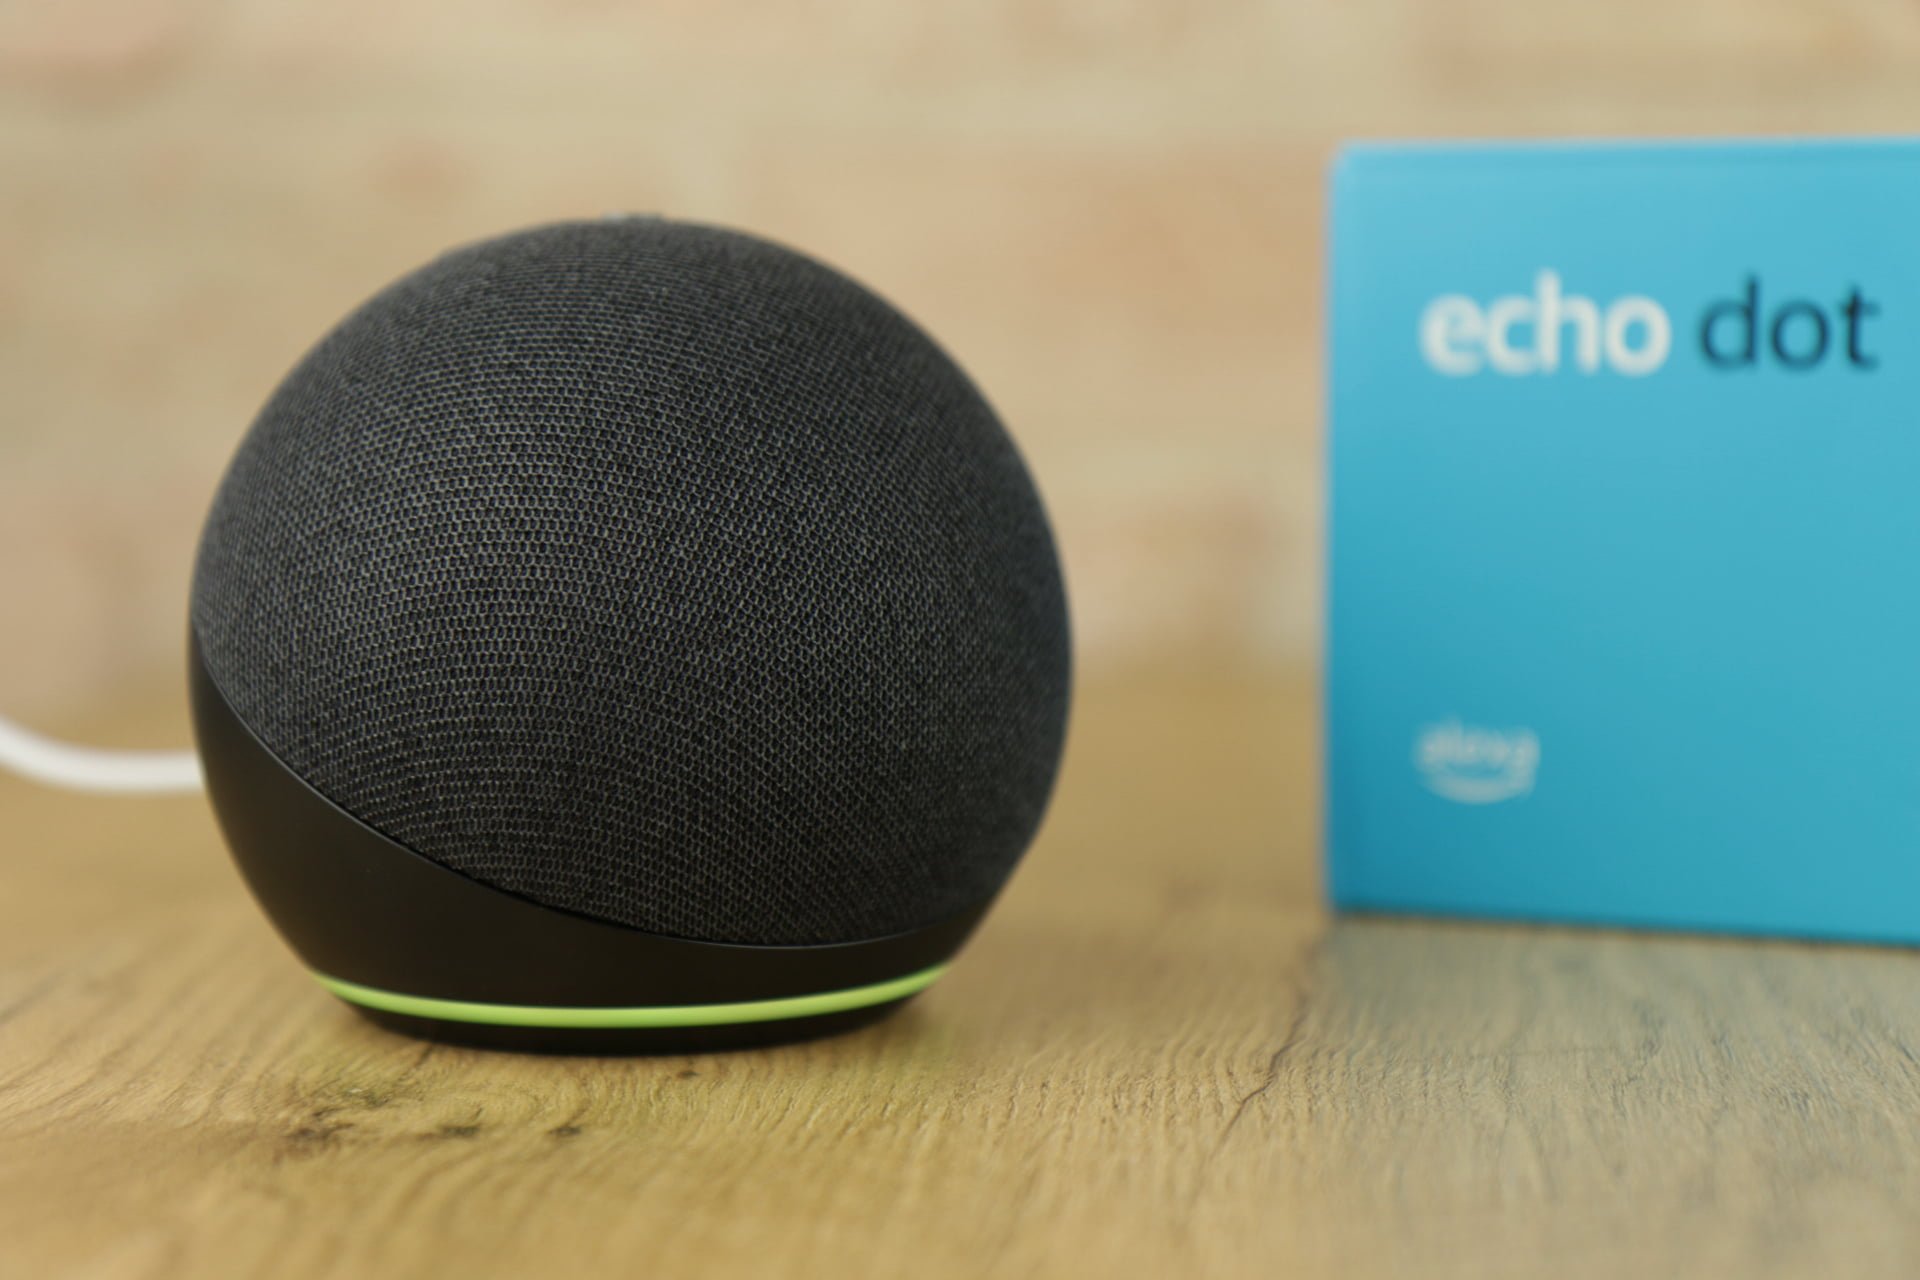 Amazon Echo Dot Alexa recenzja test